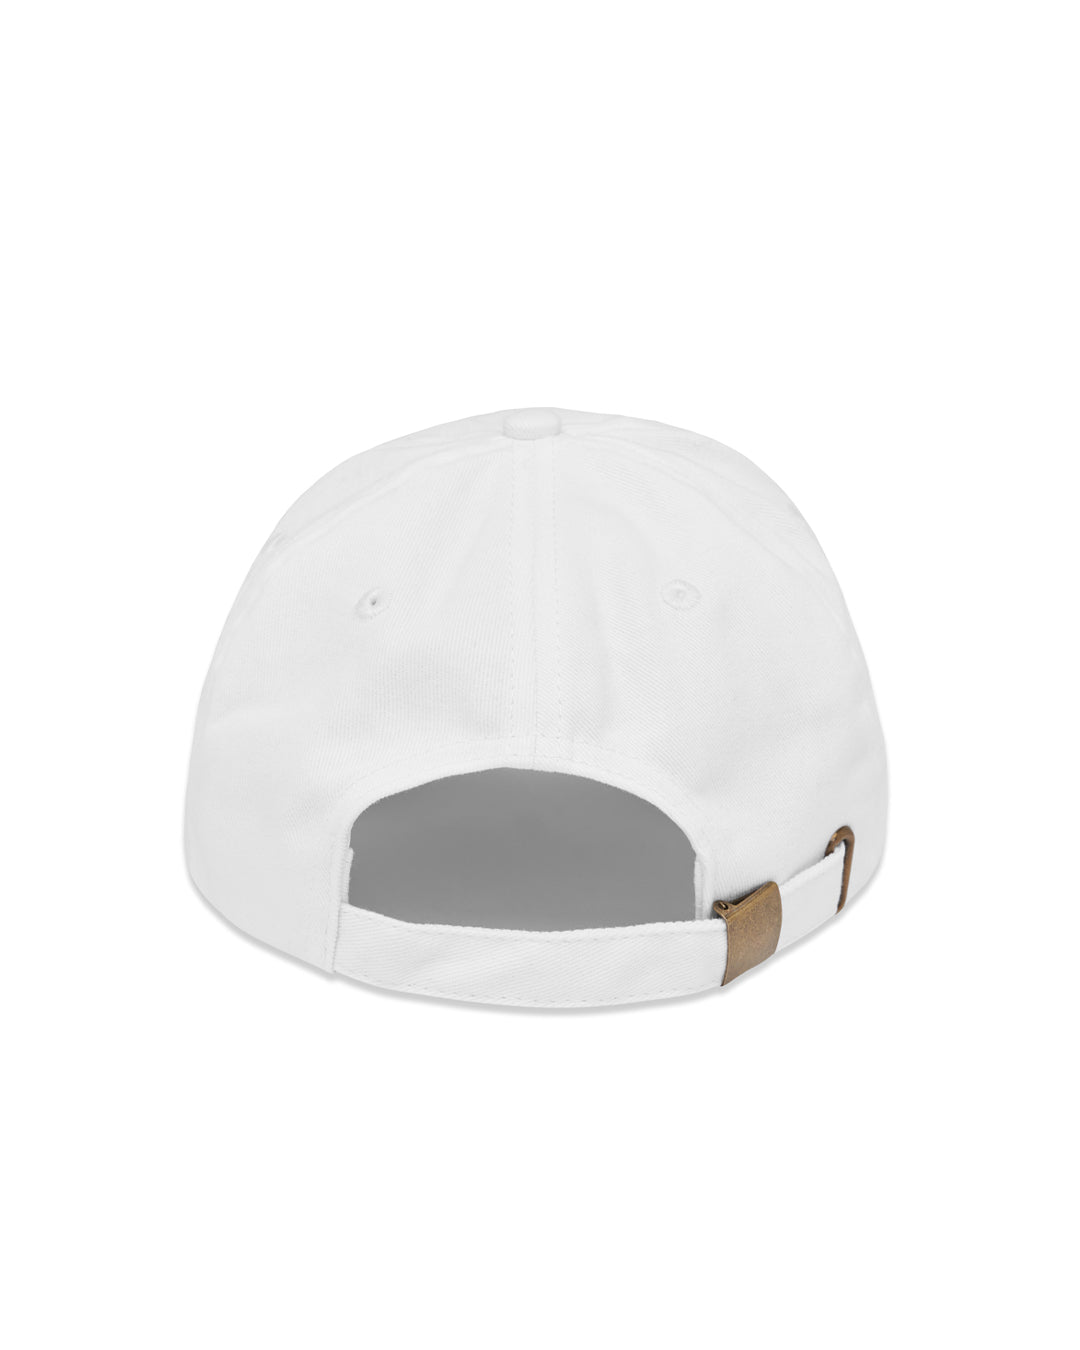 COMPANY HAT - WHITE